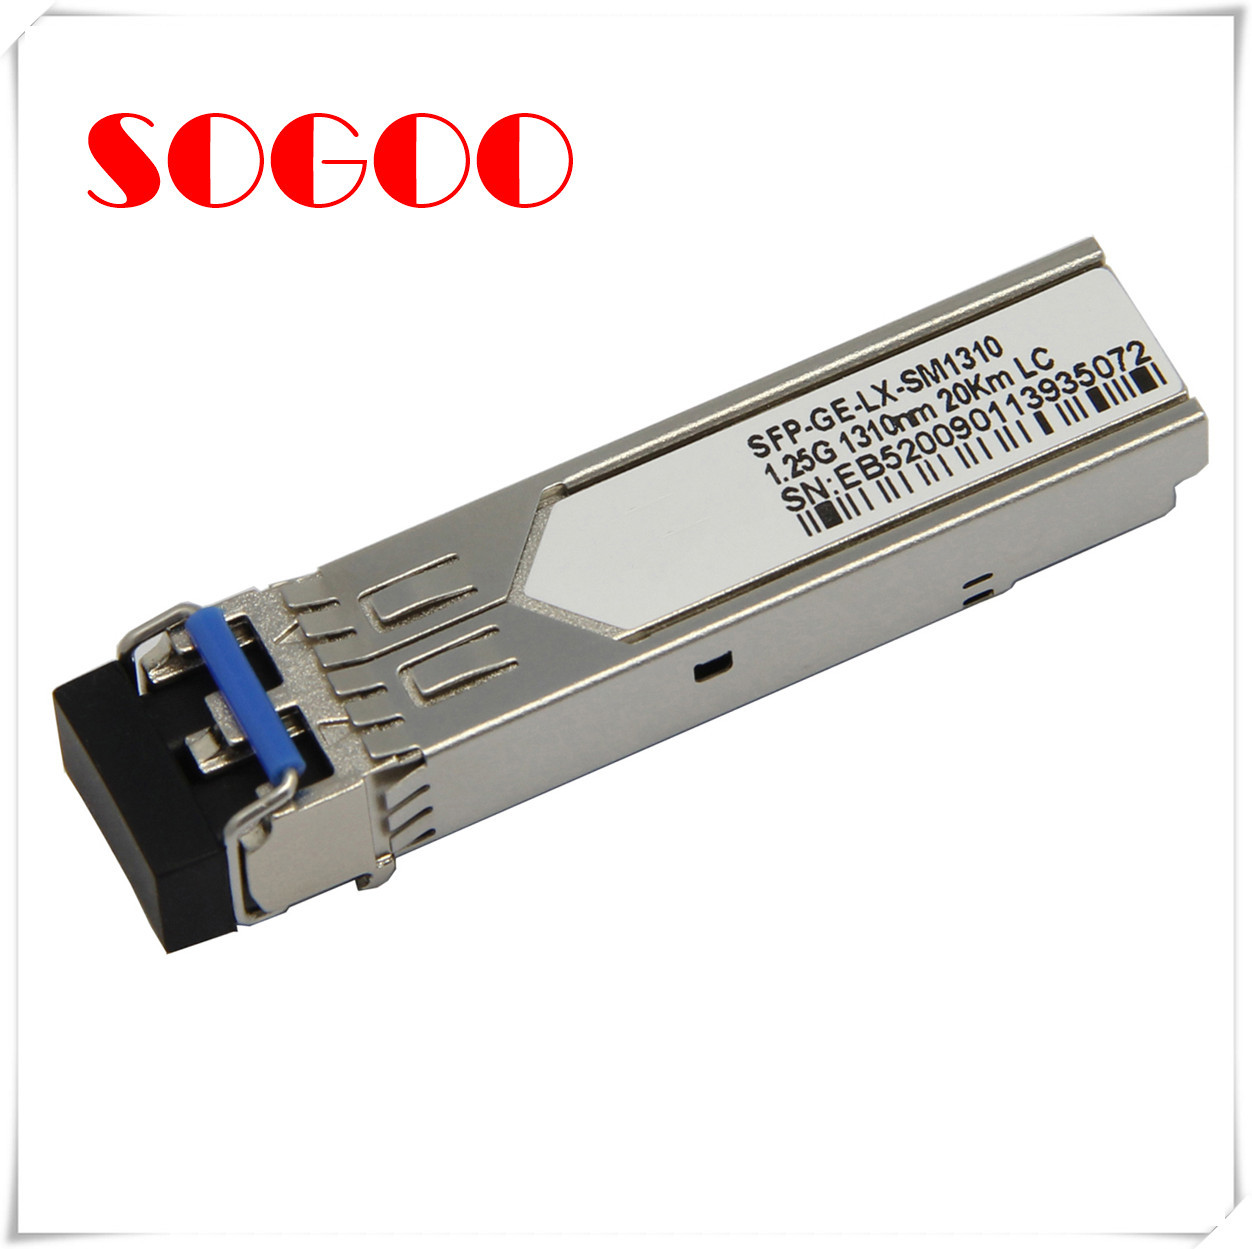  CISCO 10GBASE-LR Fiber Optic SFP Module / Compatible Optical Module SFP-10G-LR-S Manufactures